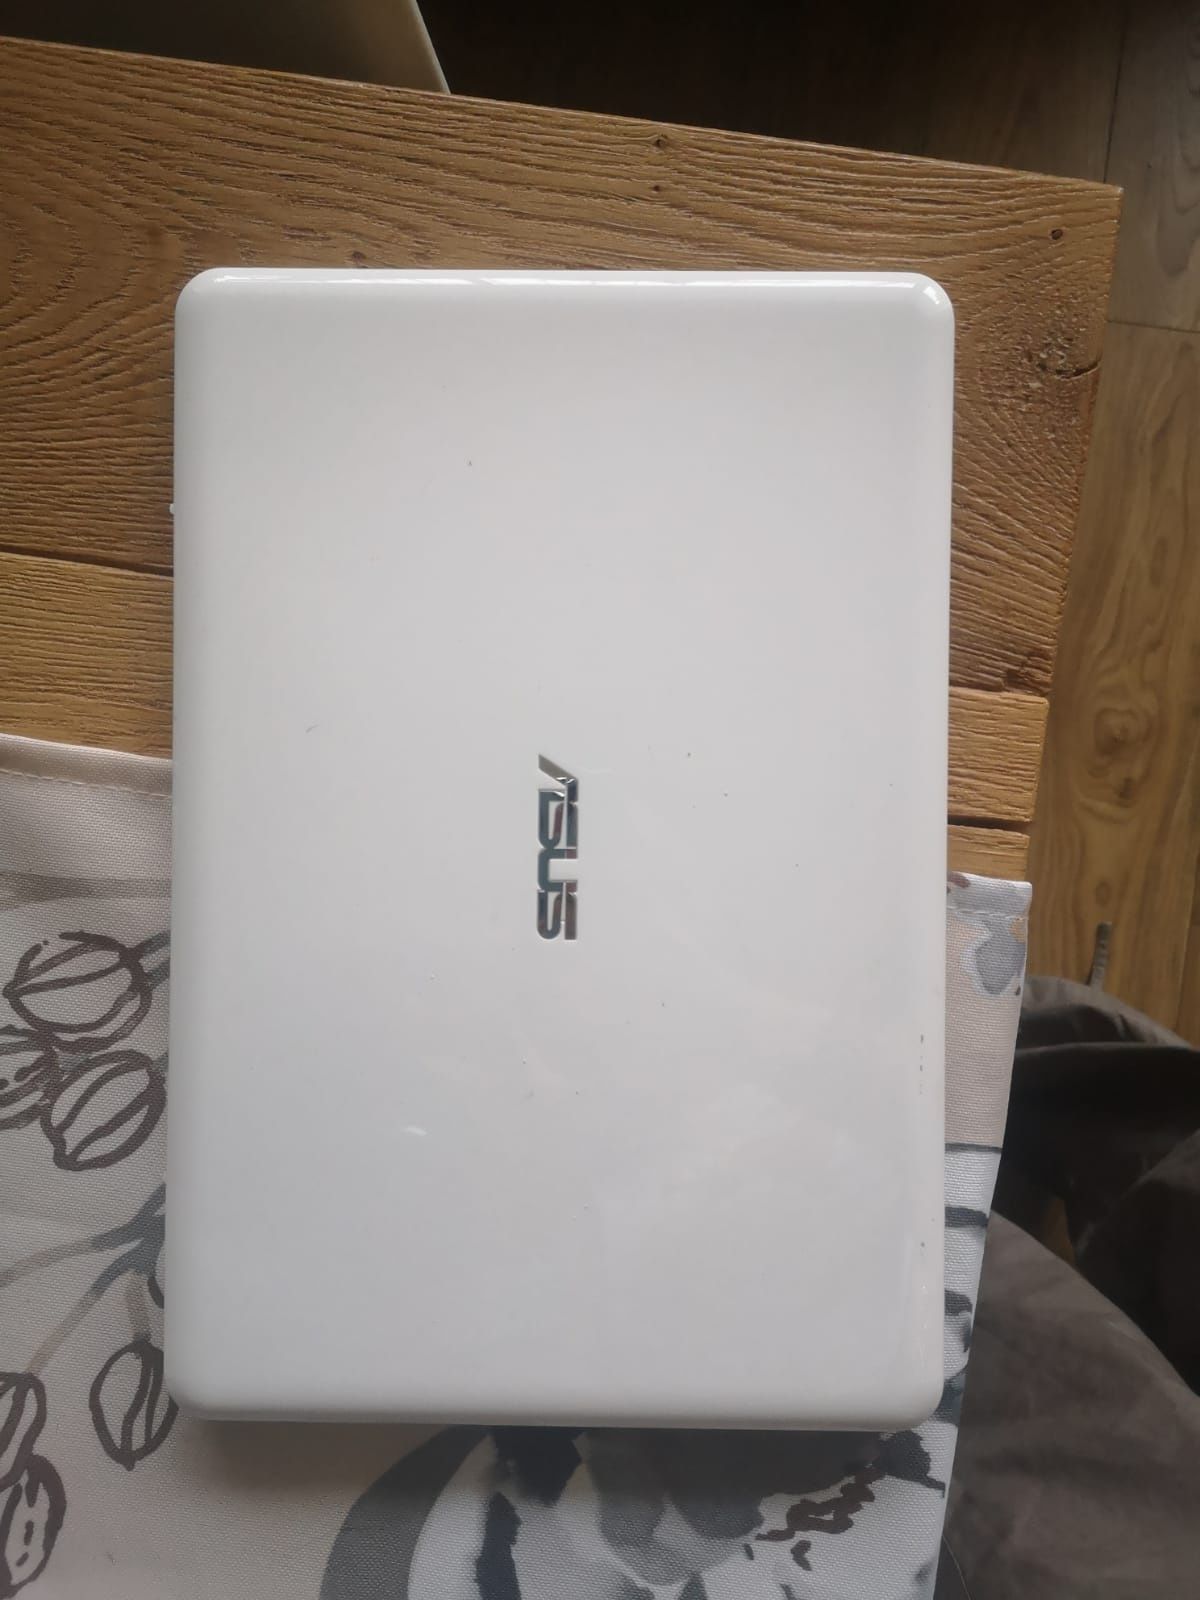 Kompaktowy laptop ASUS E200H, biały, 11,6", Linux do nauki